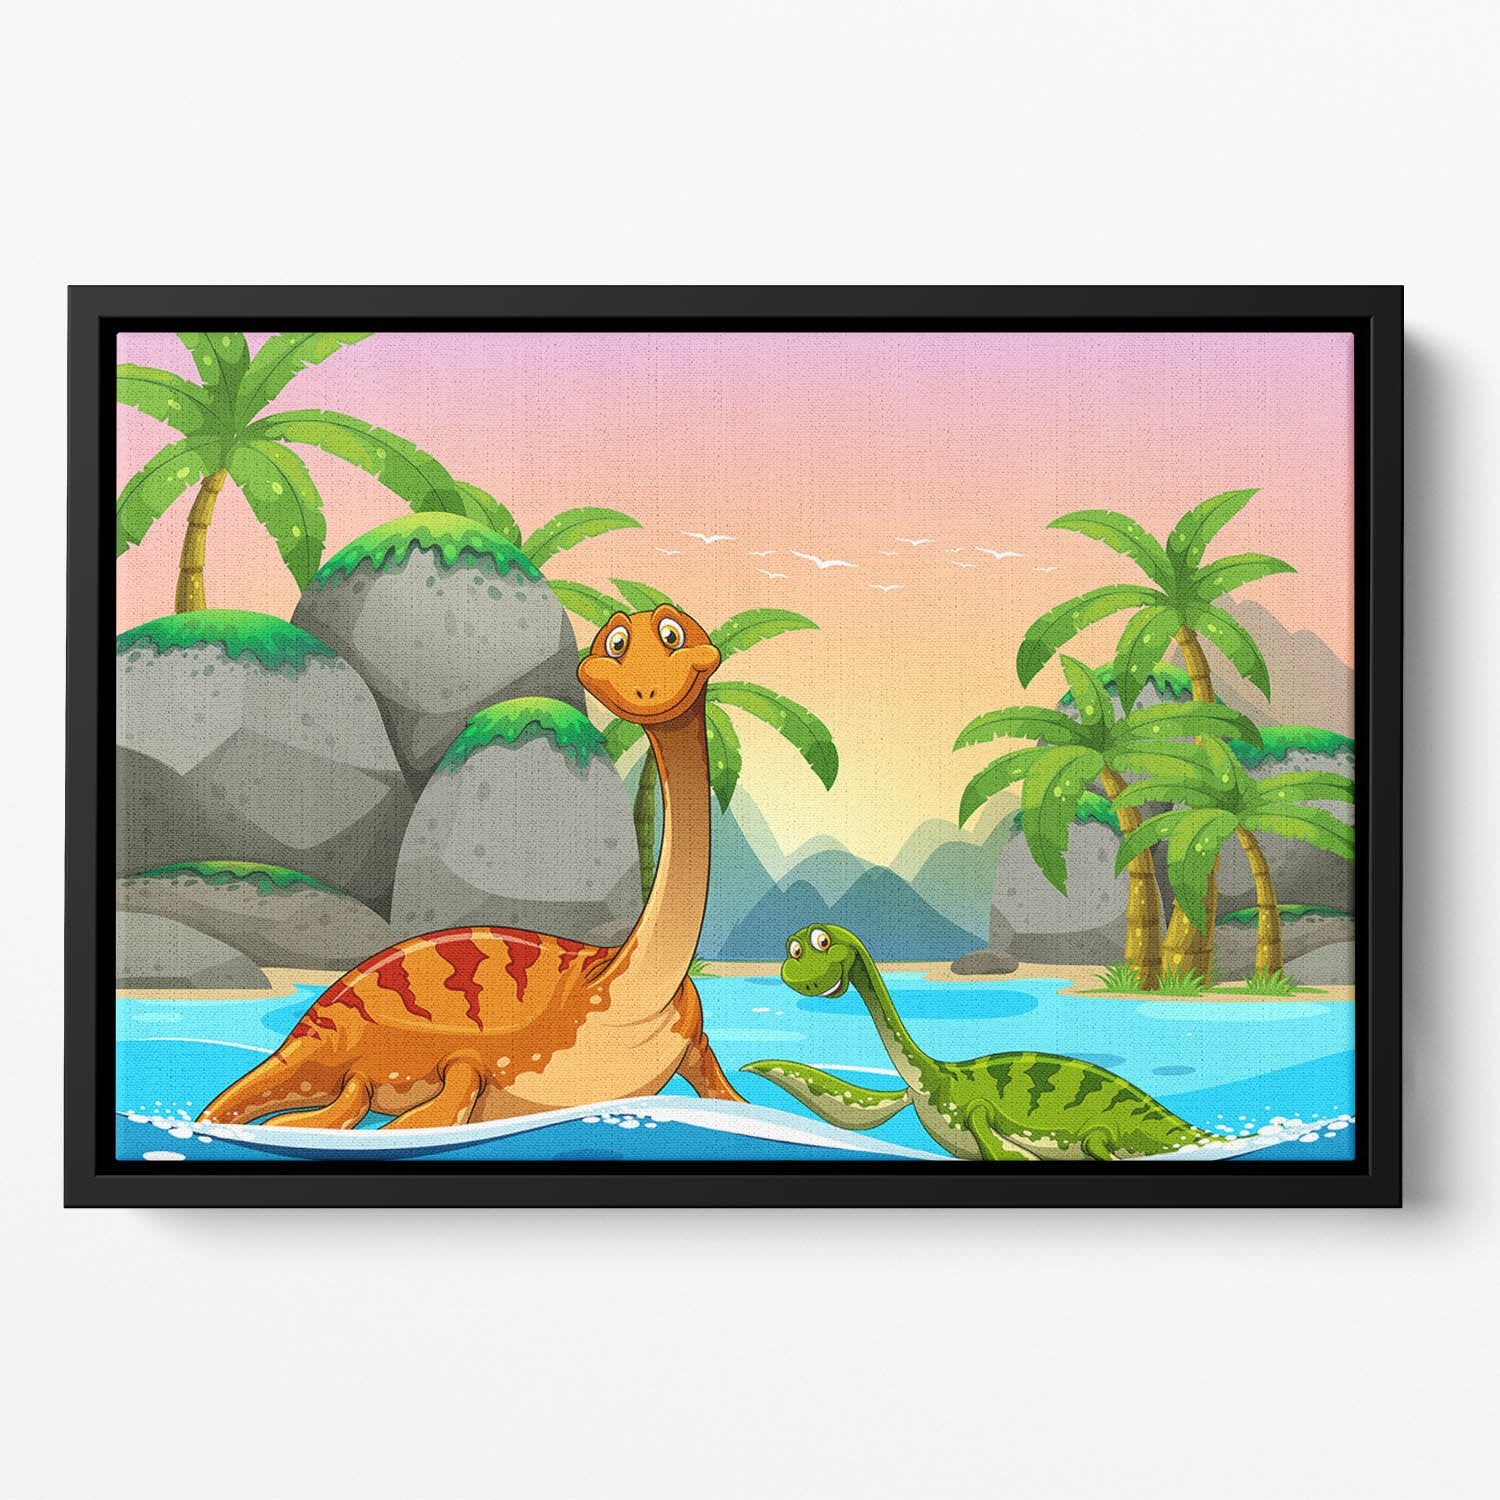 Dinosaurs living in the ocean Floating Framed Canvas